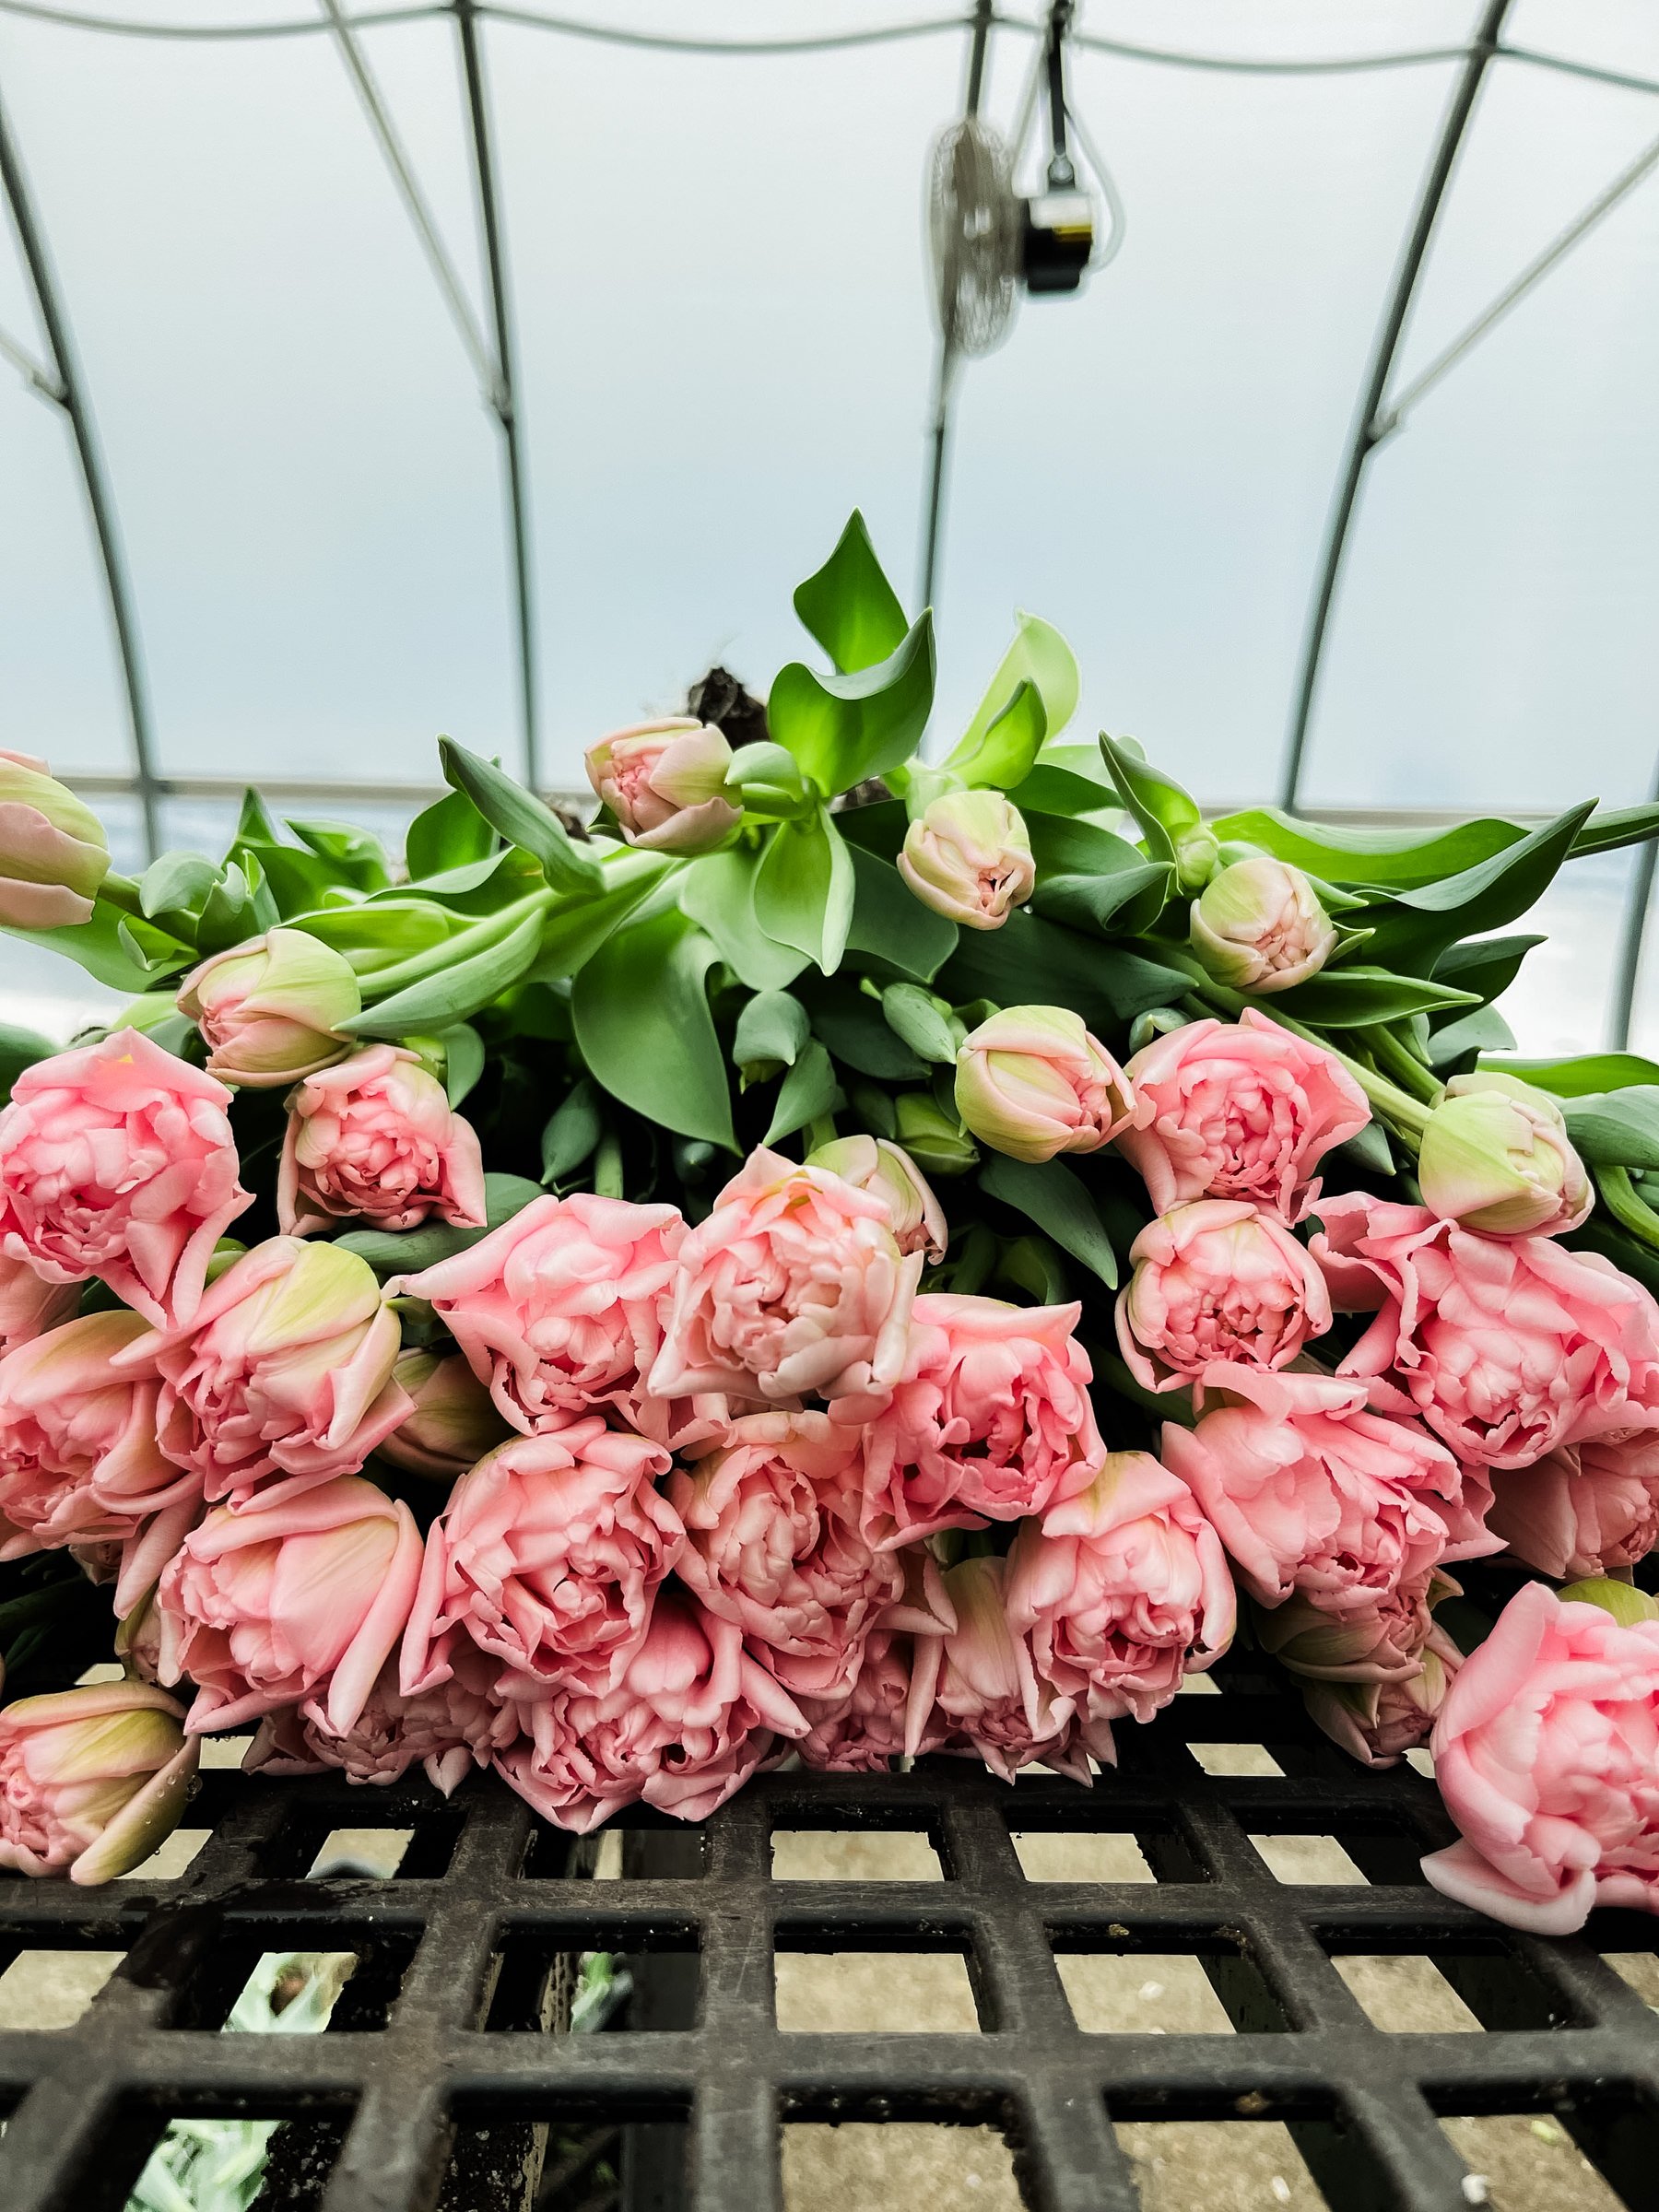 Diddle-And-Zen-Vermont-Wedding-Floral-Designer-Arrangement-Bouquet-Diddle-and-Zen-Vermont-Florist-Tulip-Subscription07.jpg